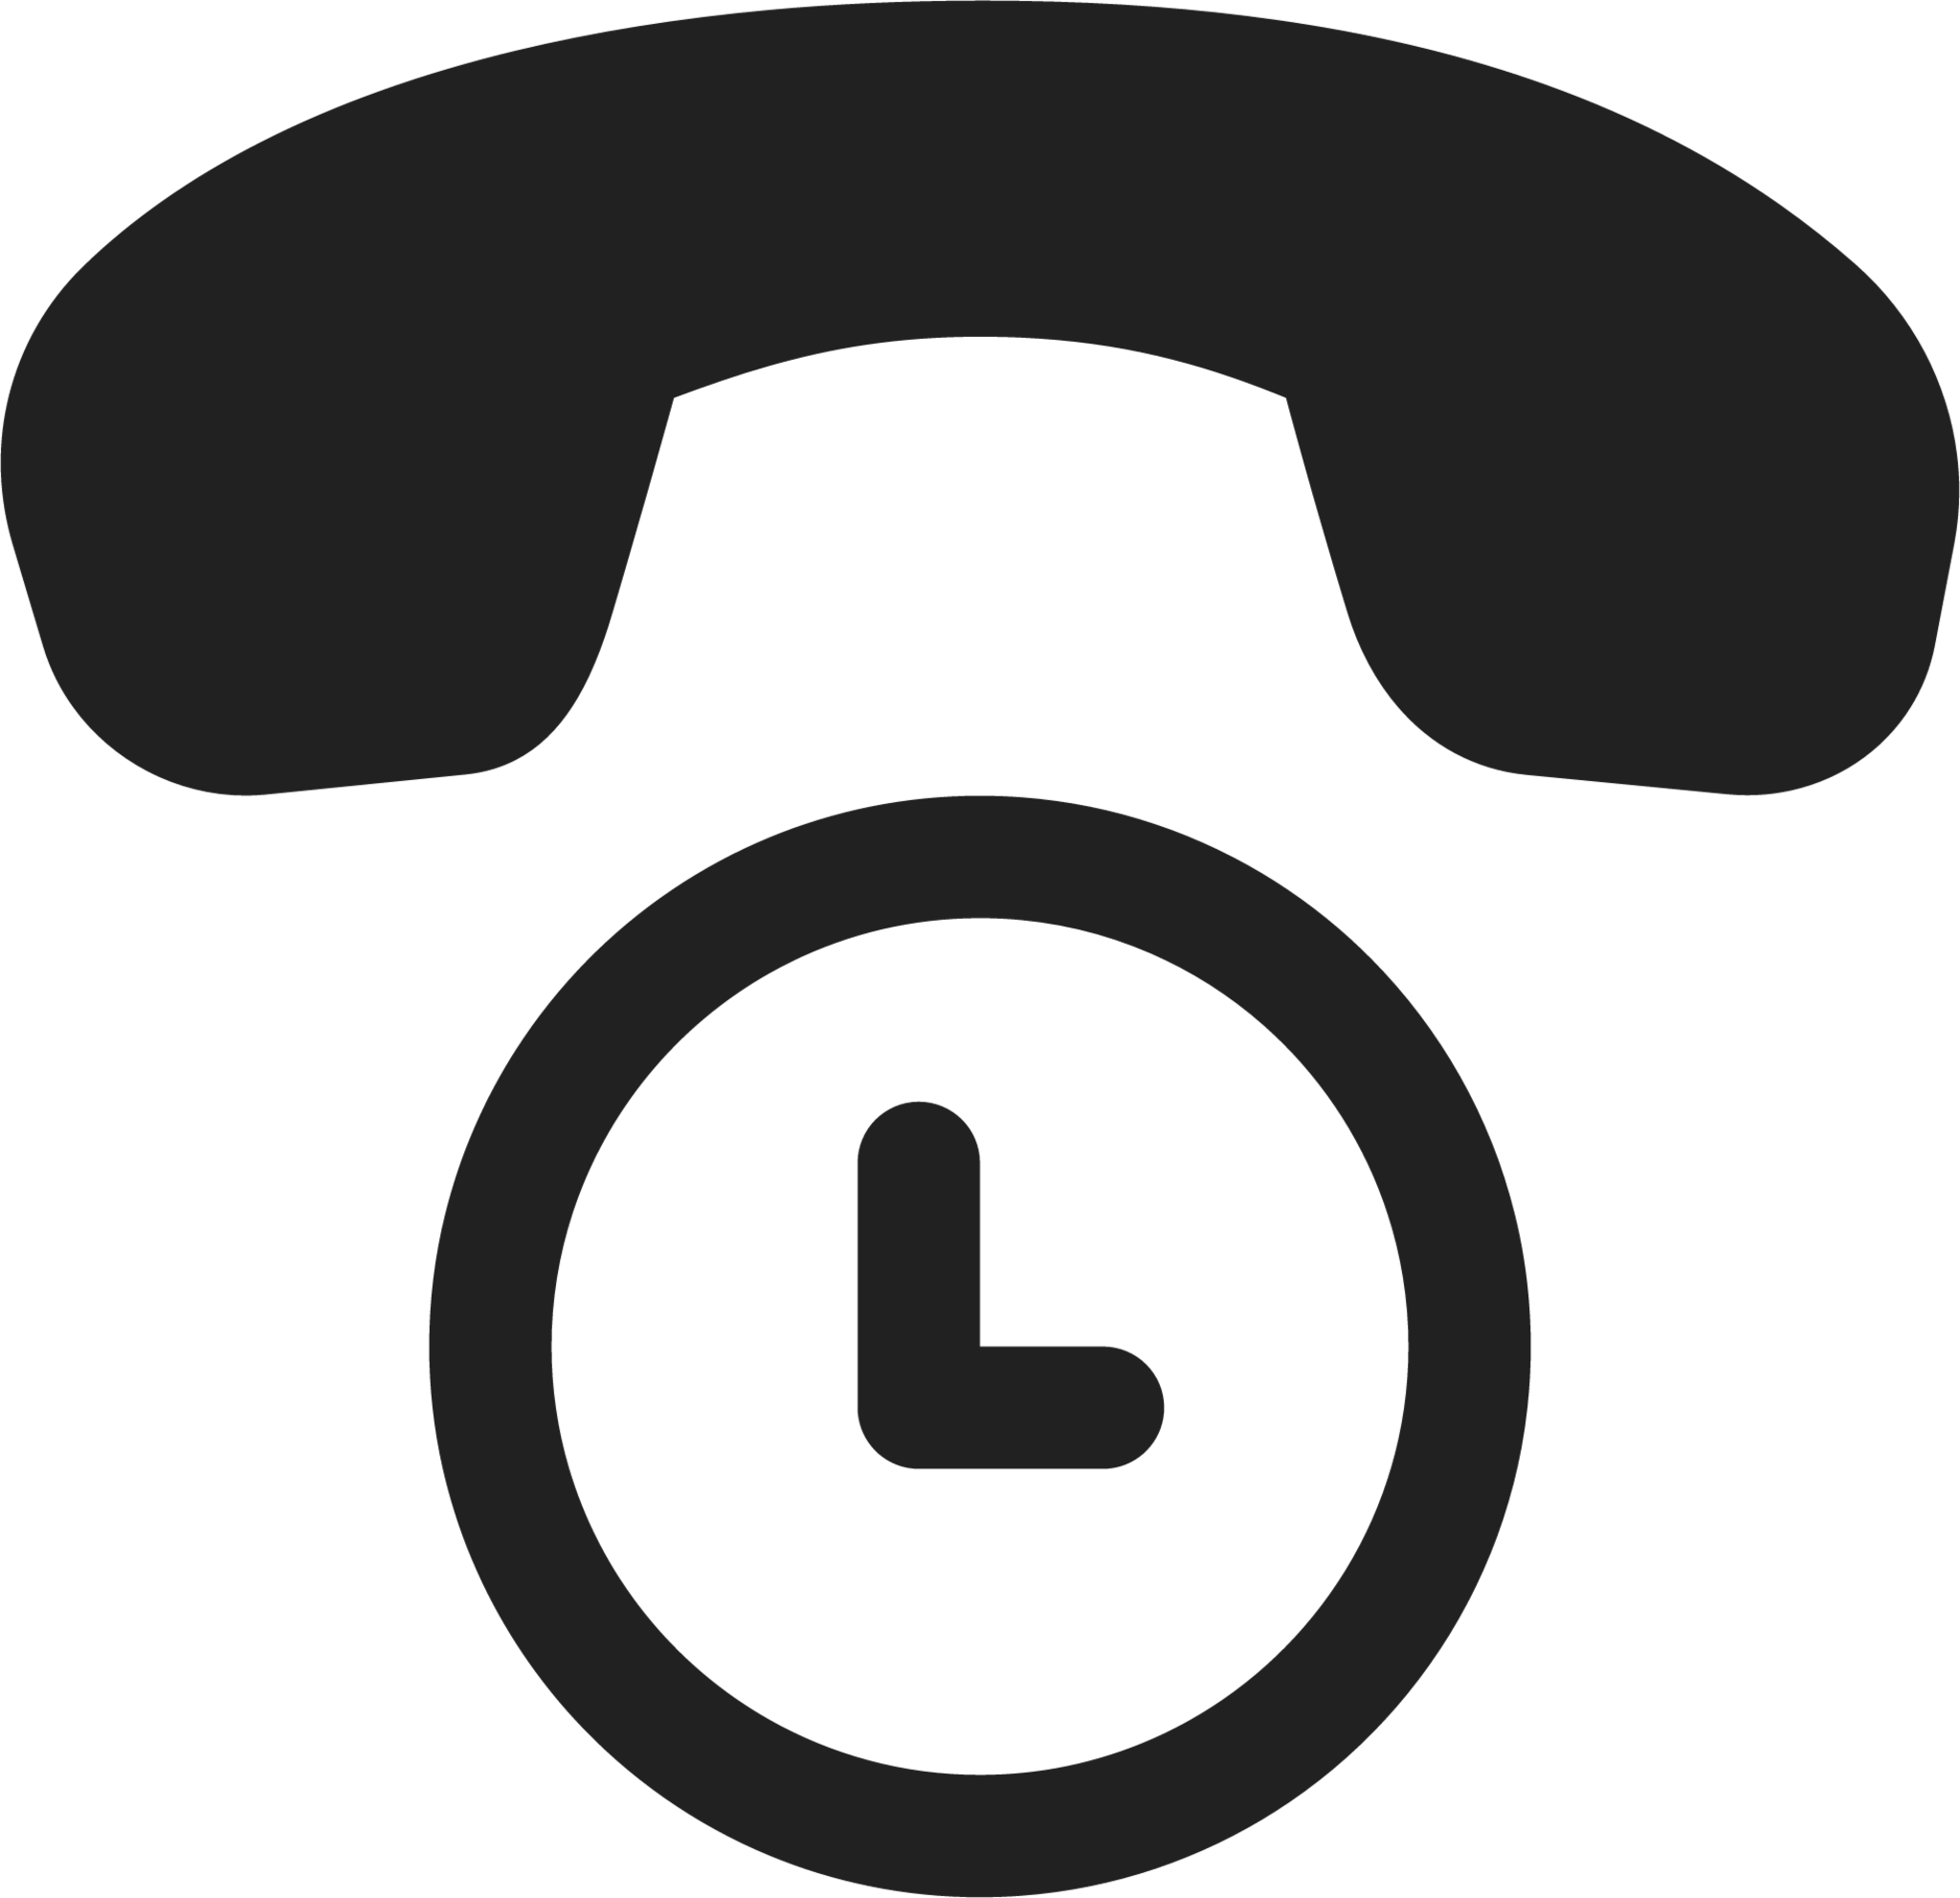 Call End icon